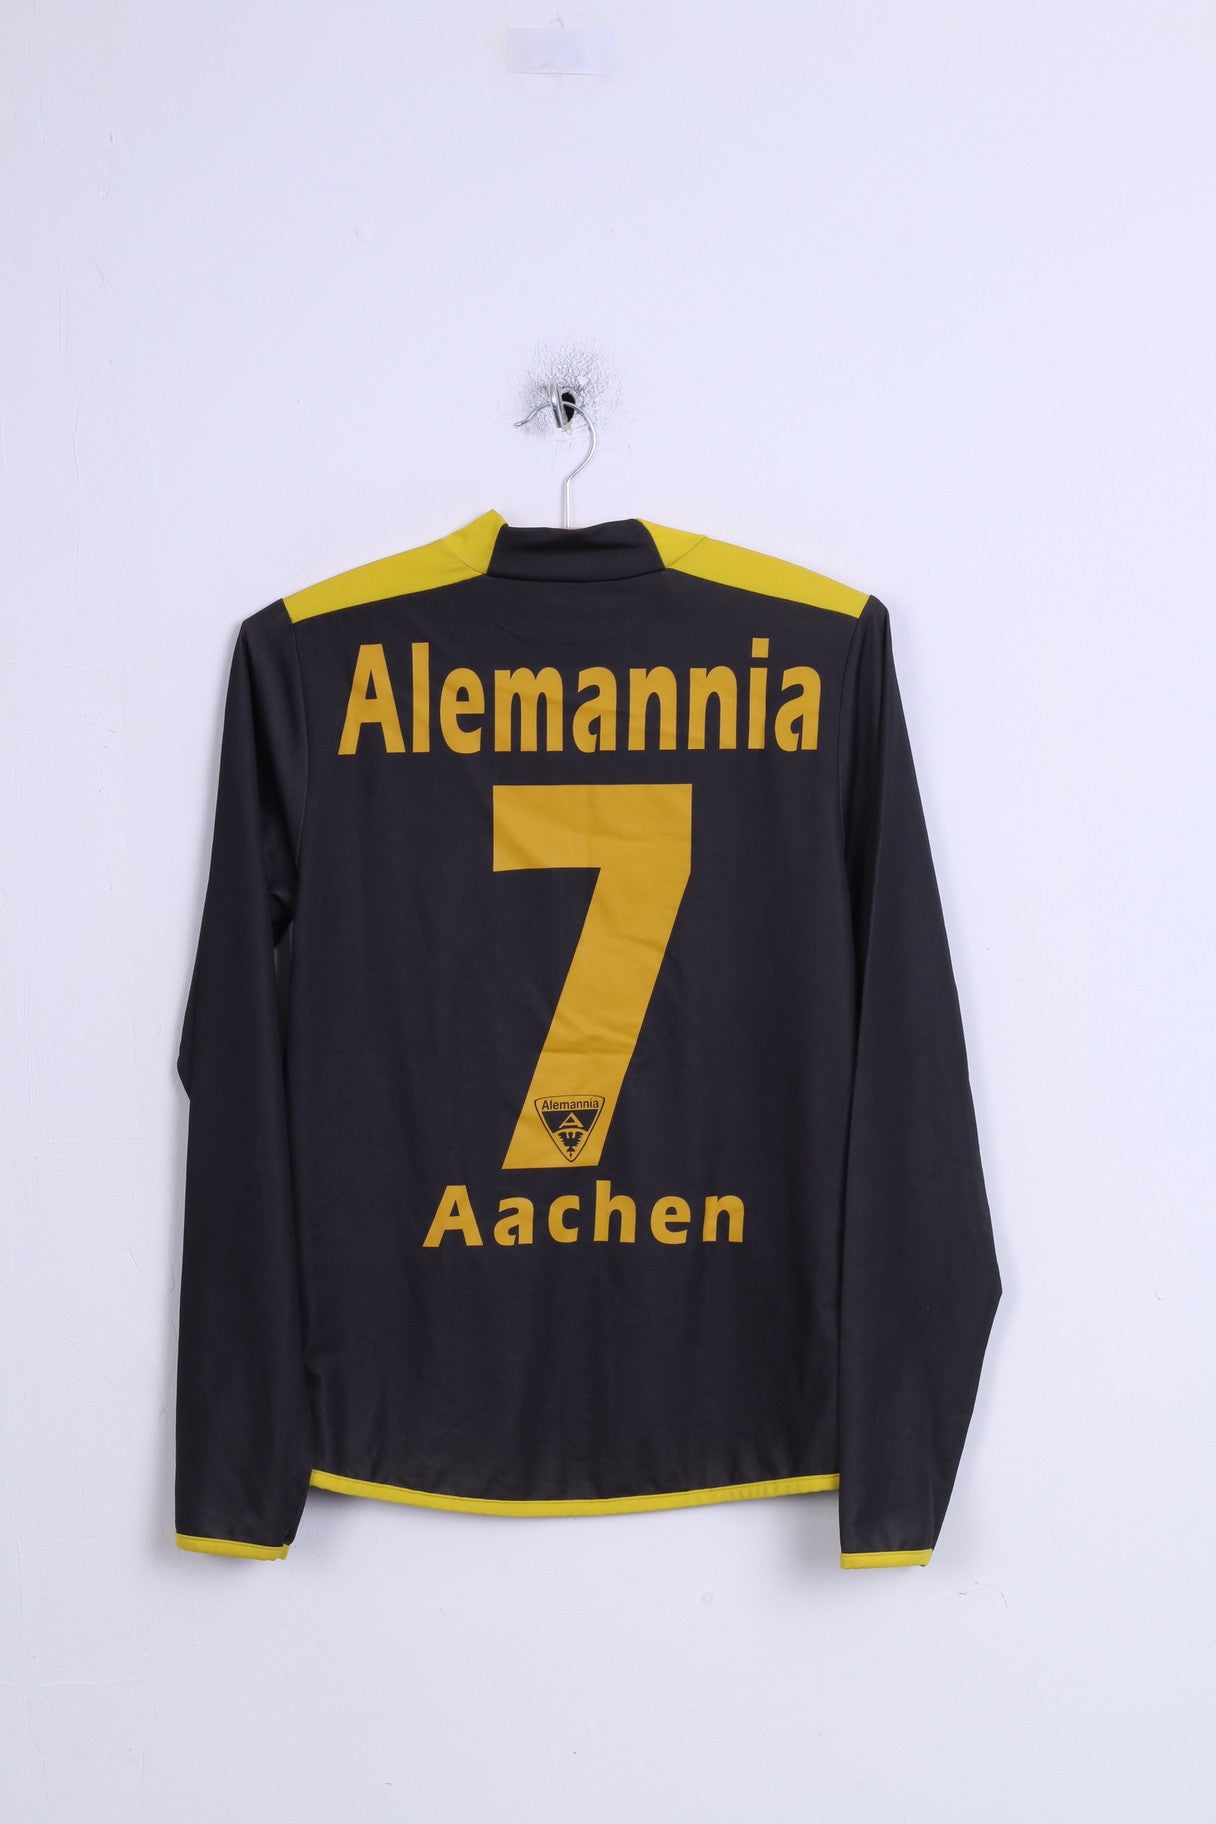 JAKO Boys S Shirt Alemannia AachenNo 7 Jersey Football Germany Shirt